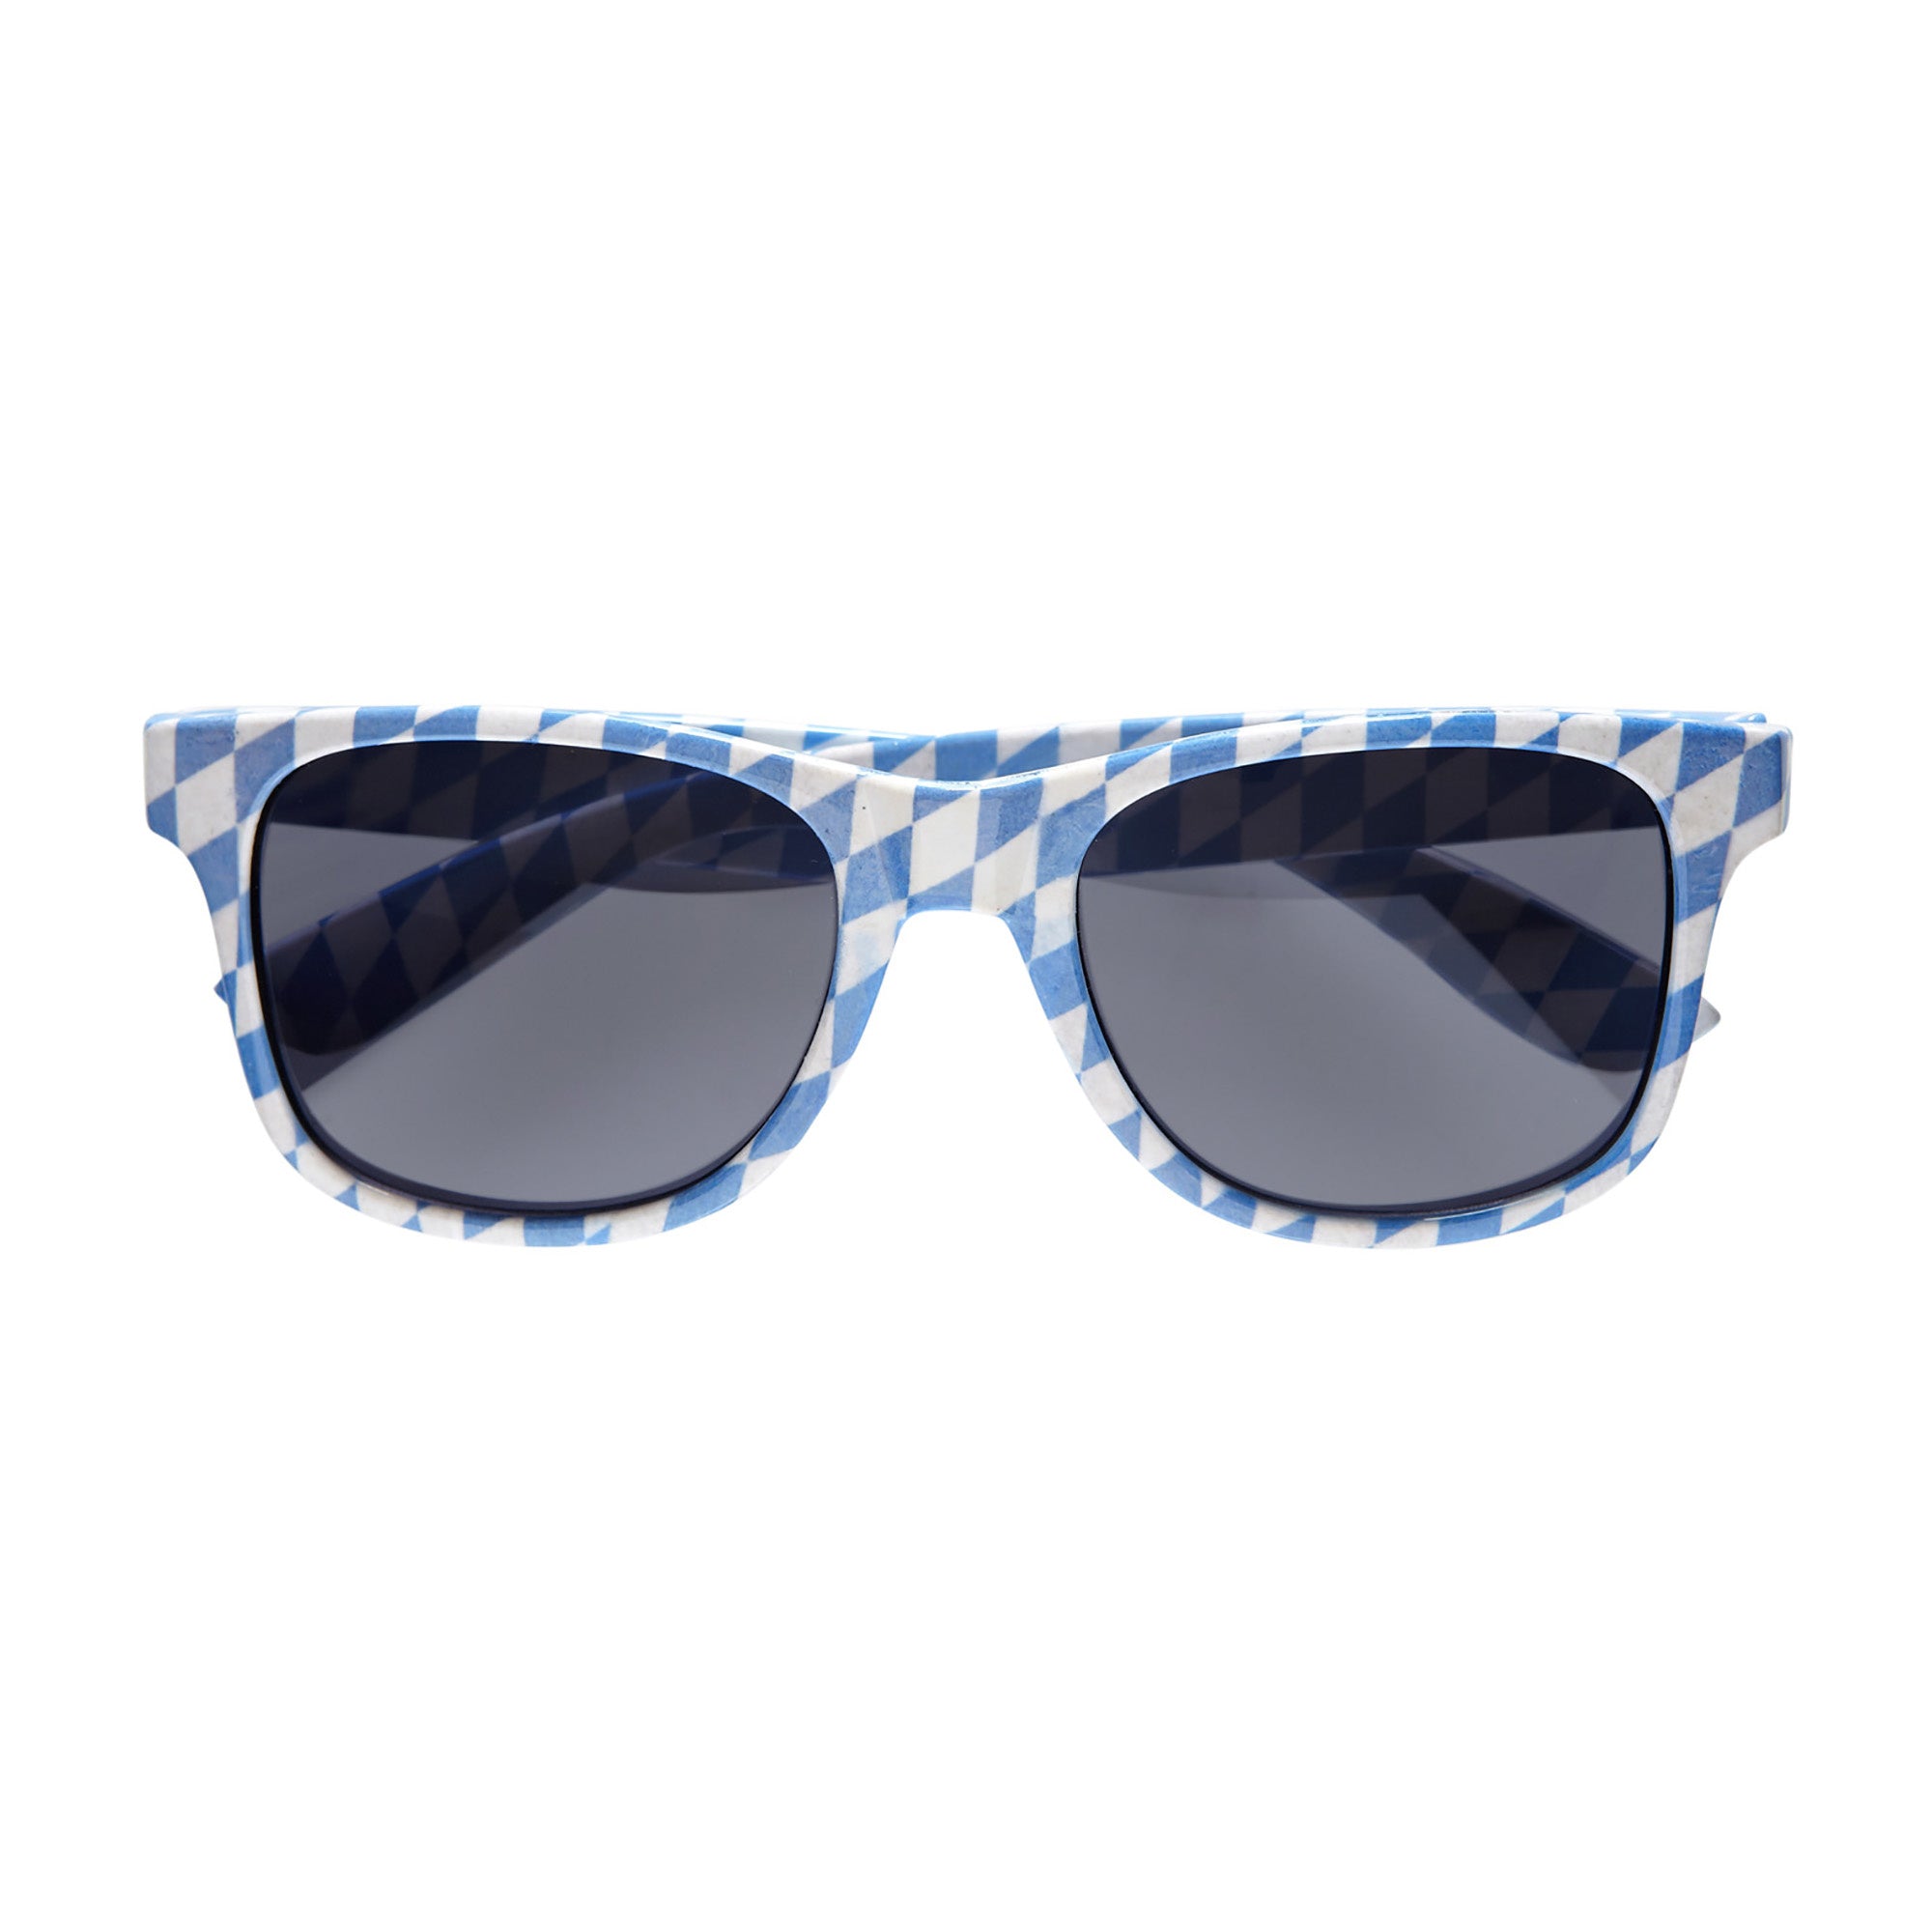 WIDMANN - Wit met blauwe bierfeest bril voor volwassenen - Accessoires > Brillen